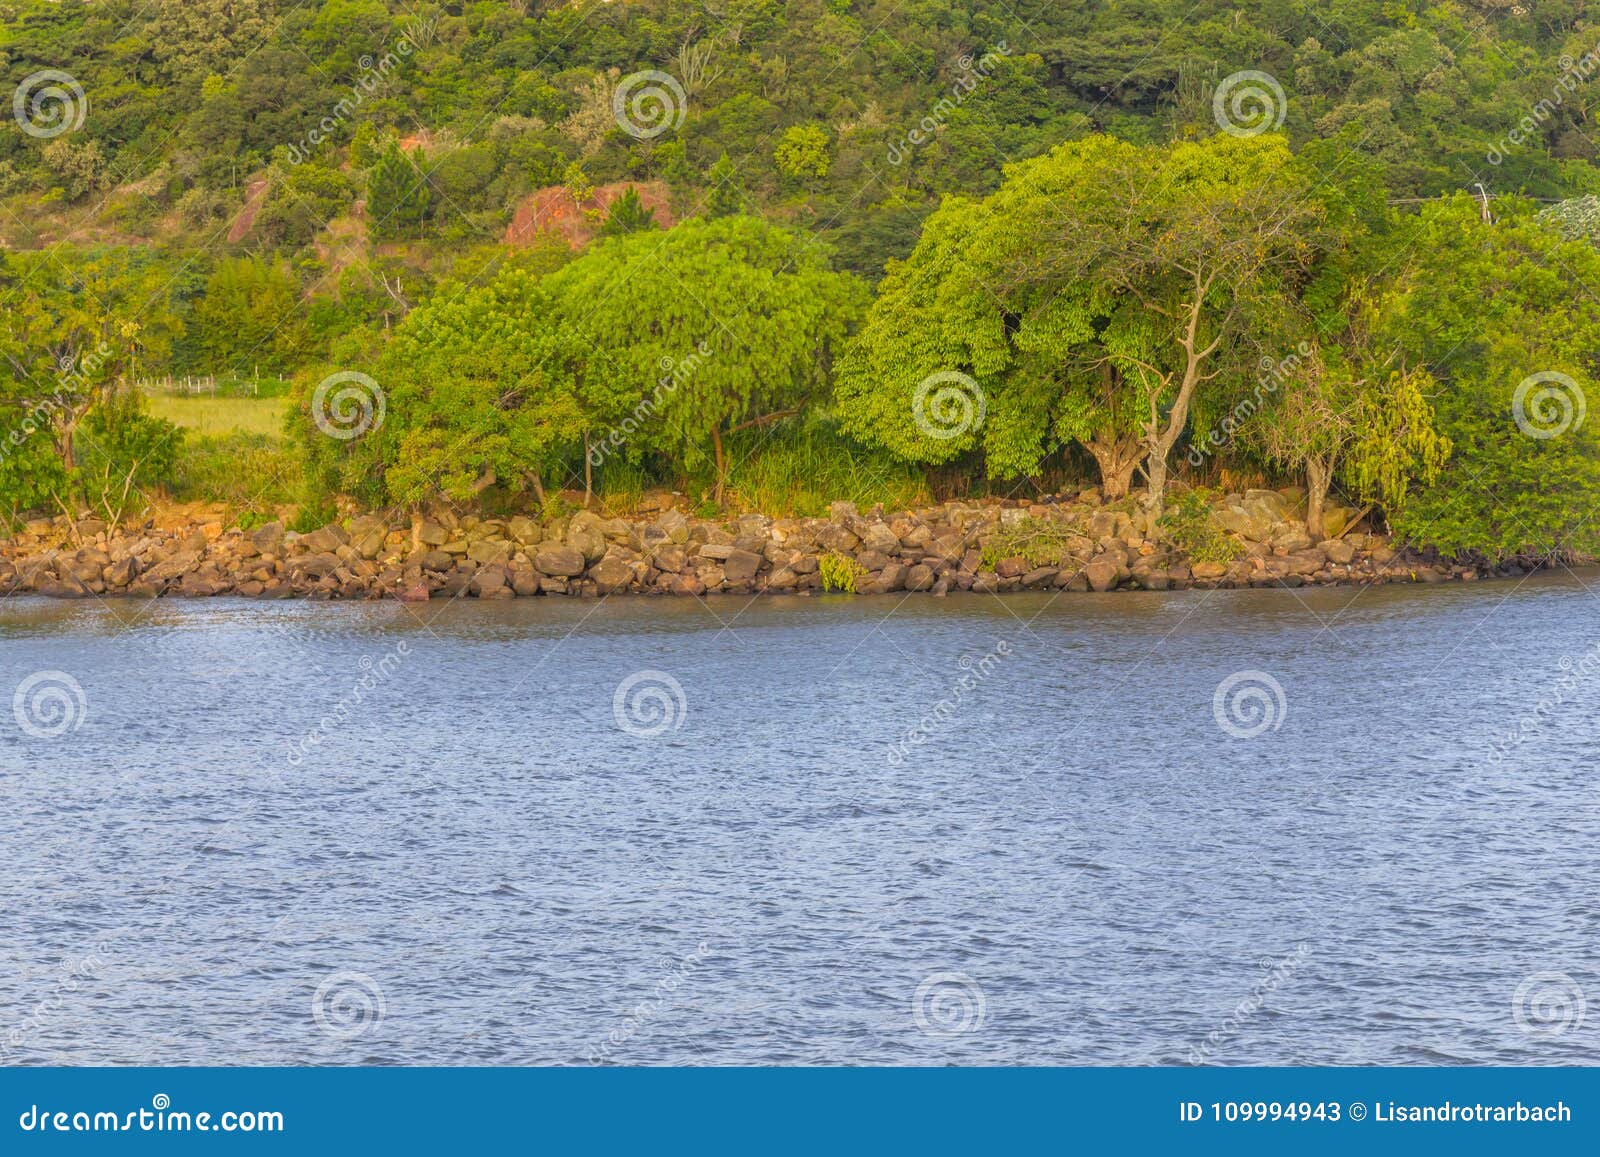 guaiba lake with rocks and trees